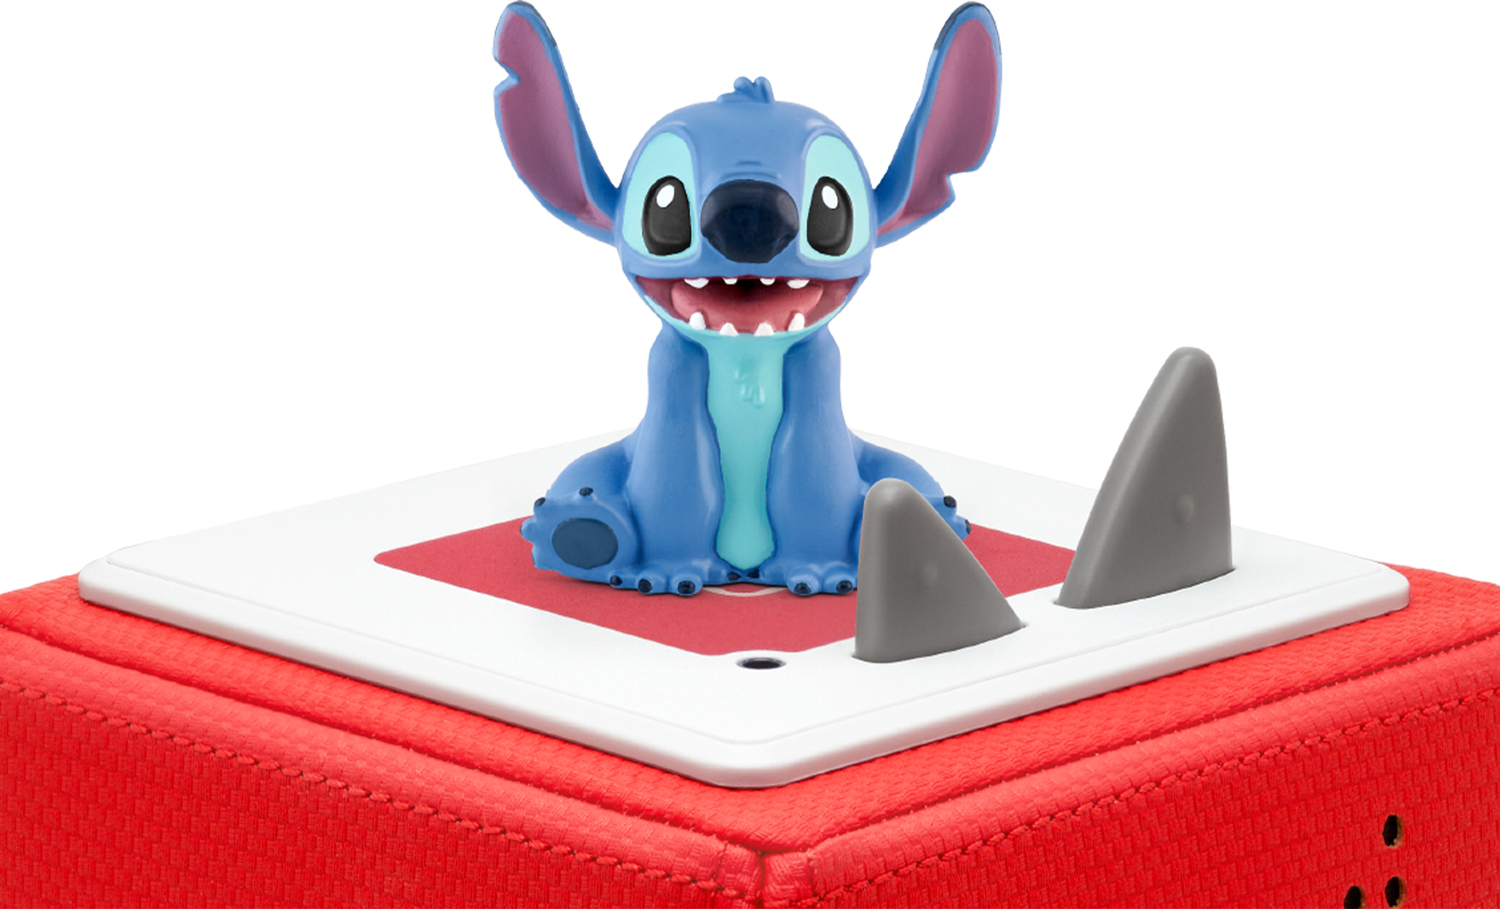 tonies - Disney Lilo & Stitch - Imagine That Toys